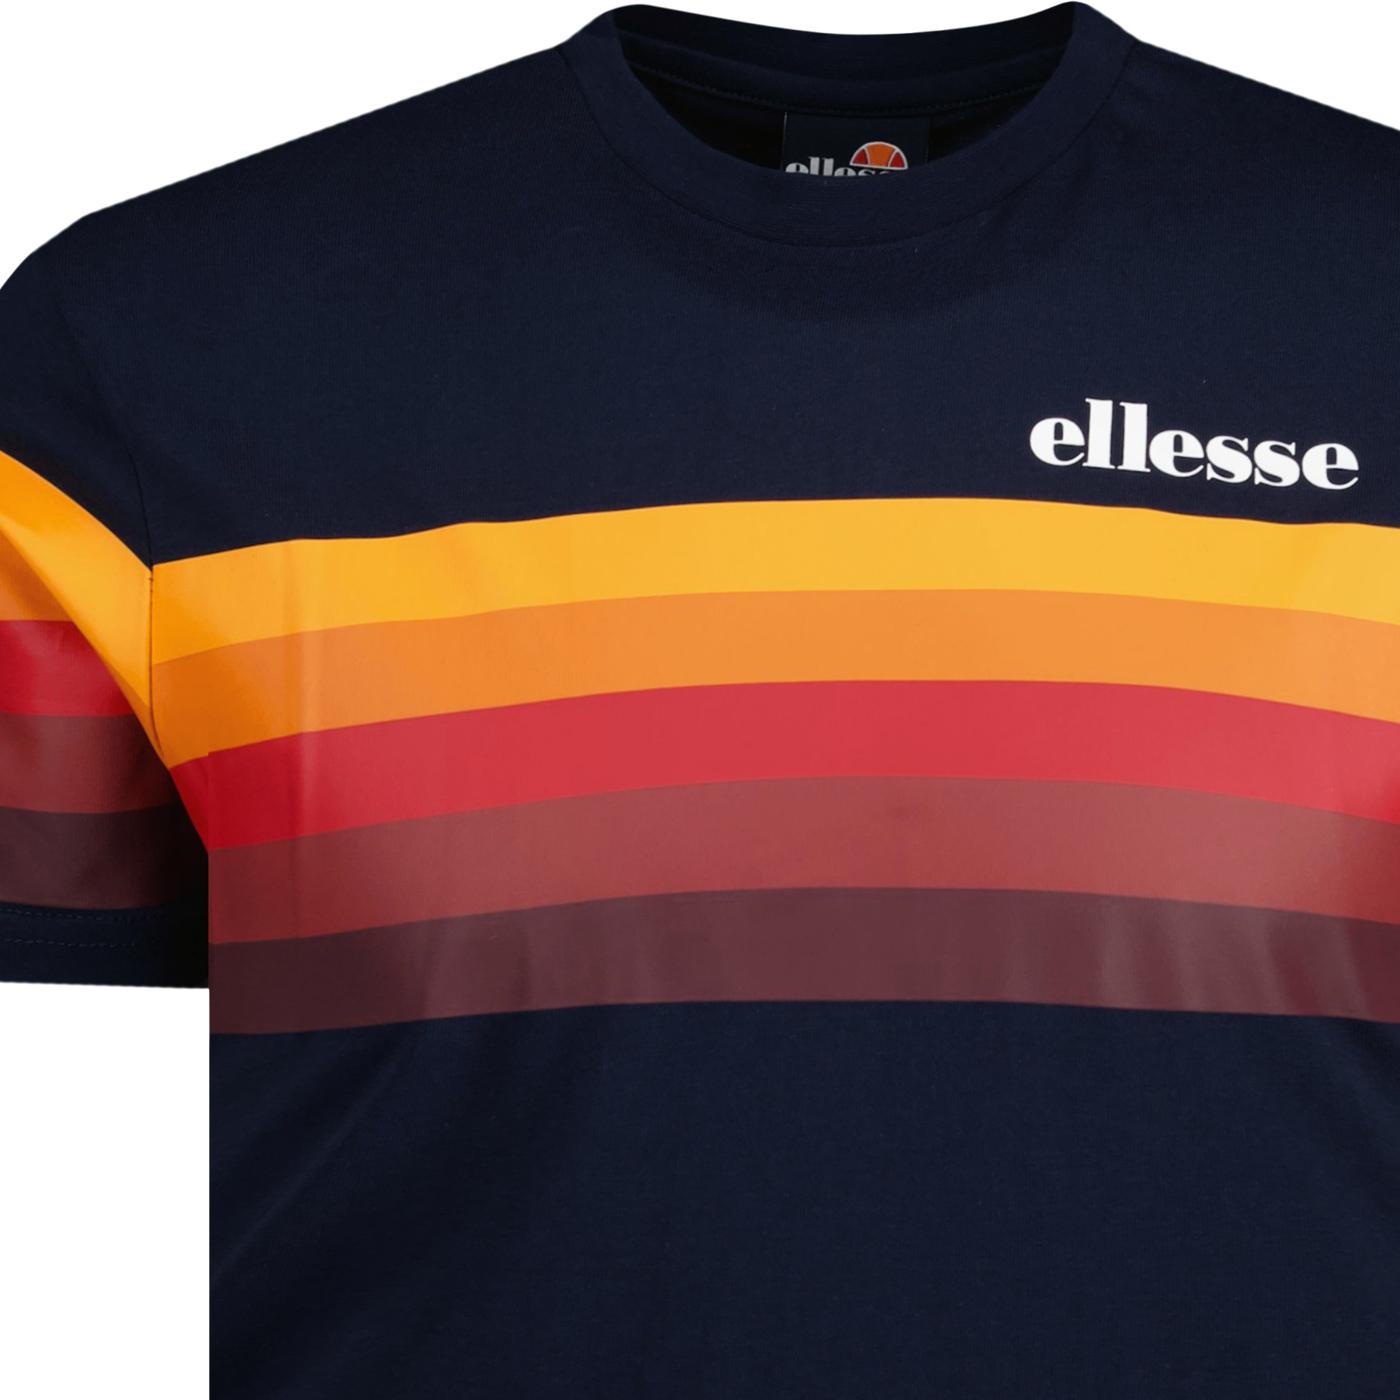 Paco ELLESSE Men\'s Retro Stripe T-shirt Navy Gradient 70s in